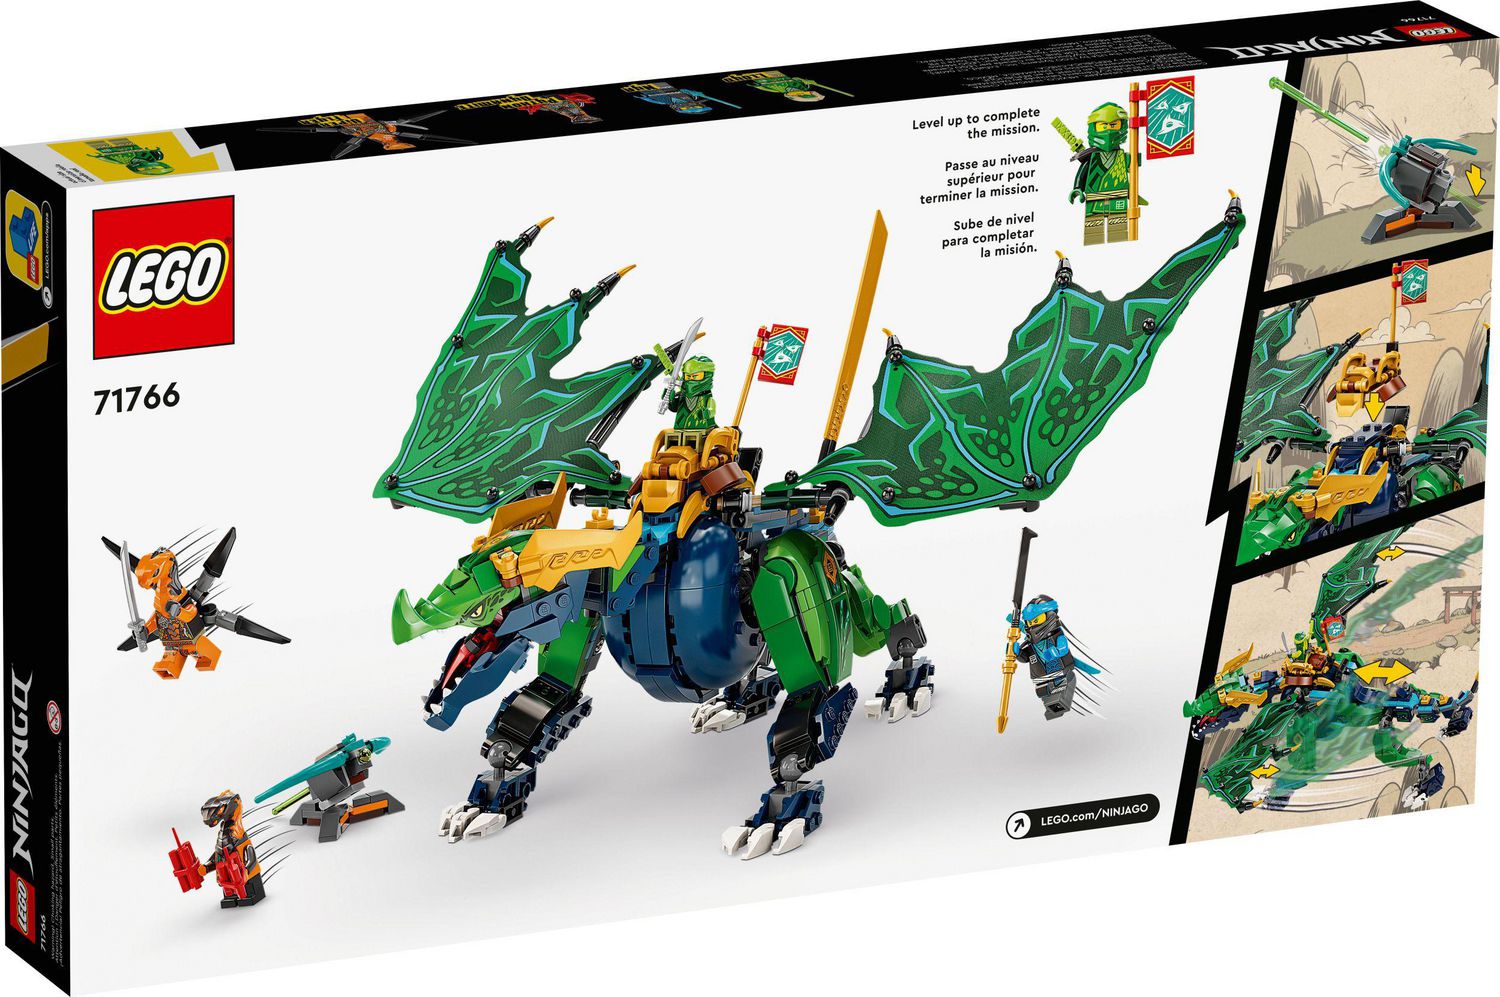 LEGO NINJAGO Lloyd’s Legendary Dragon 71766 Toy Building Kit (747 Pieces)